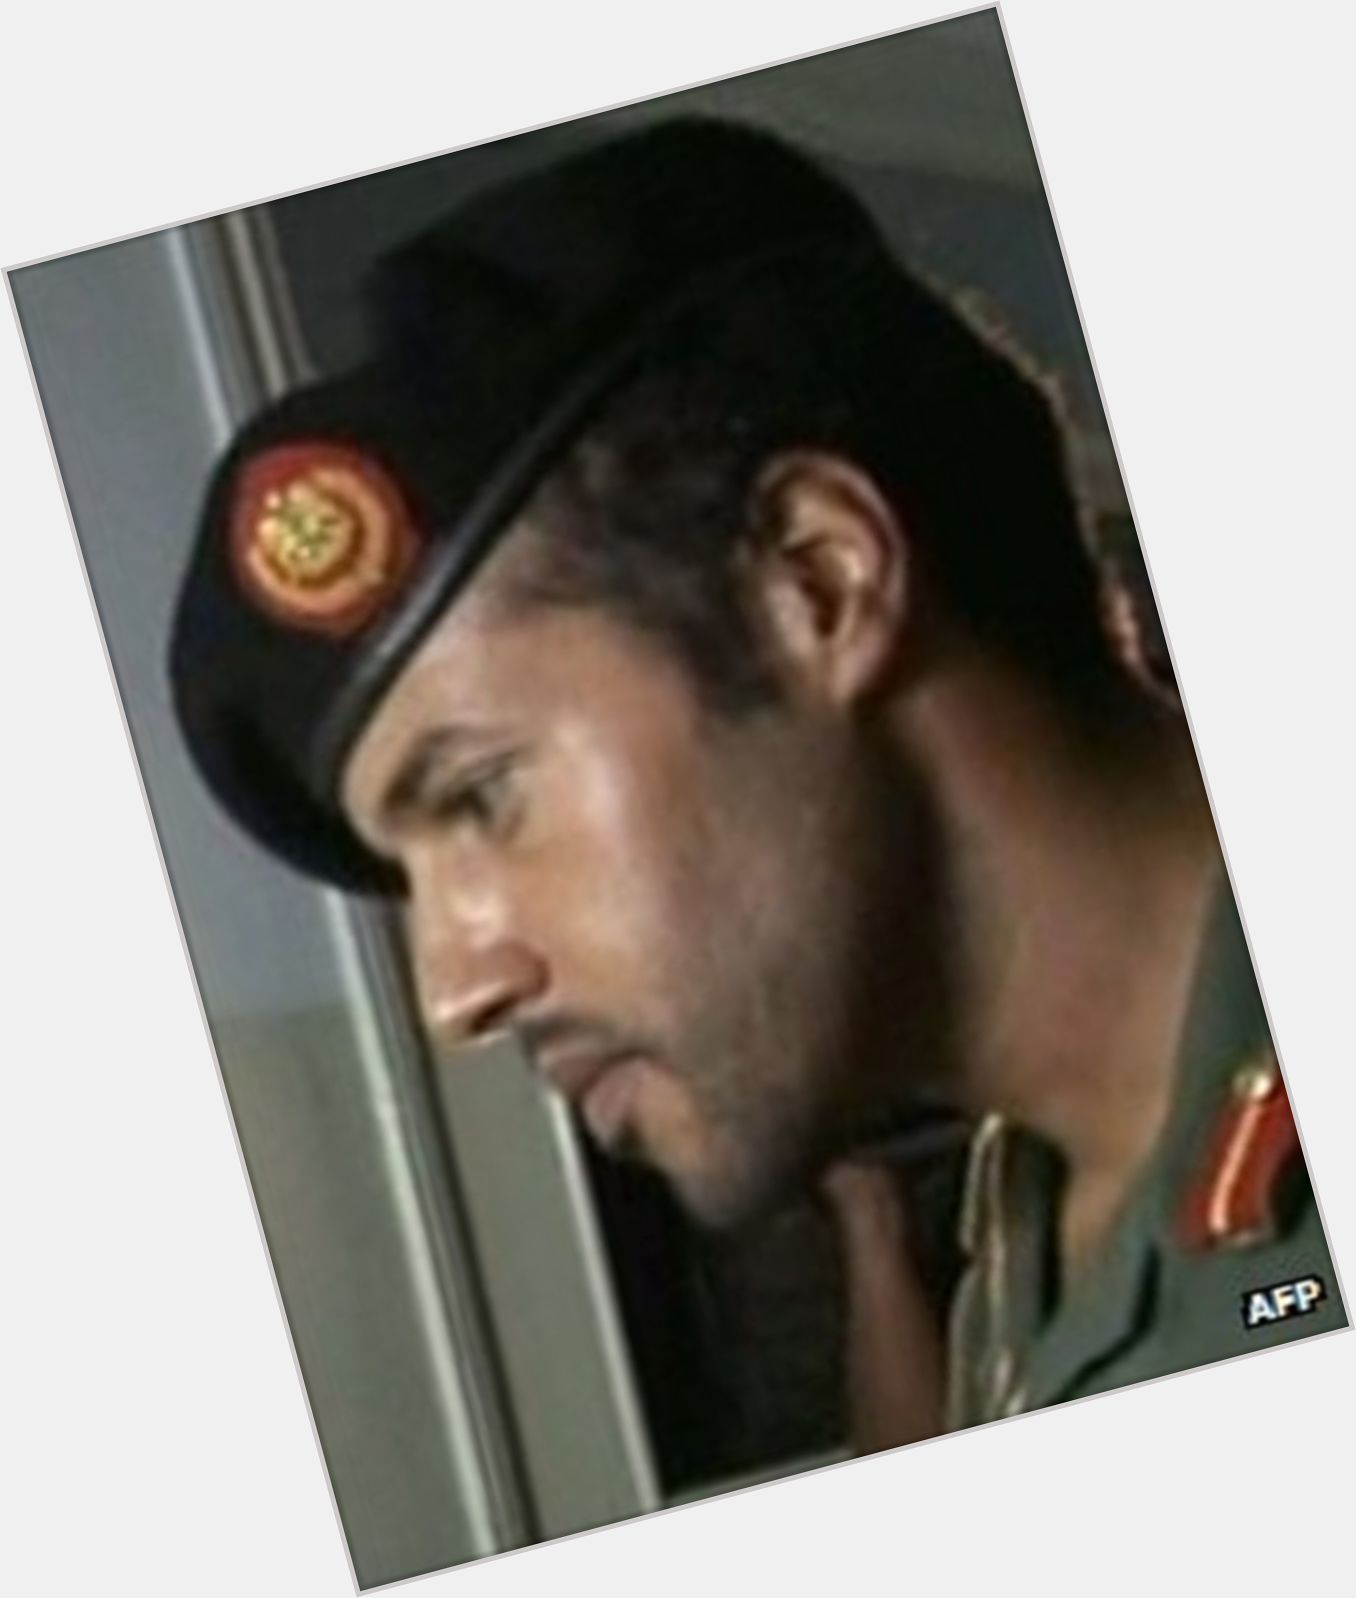 Khamis Al Gaddafi dating 2